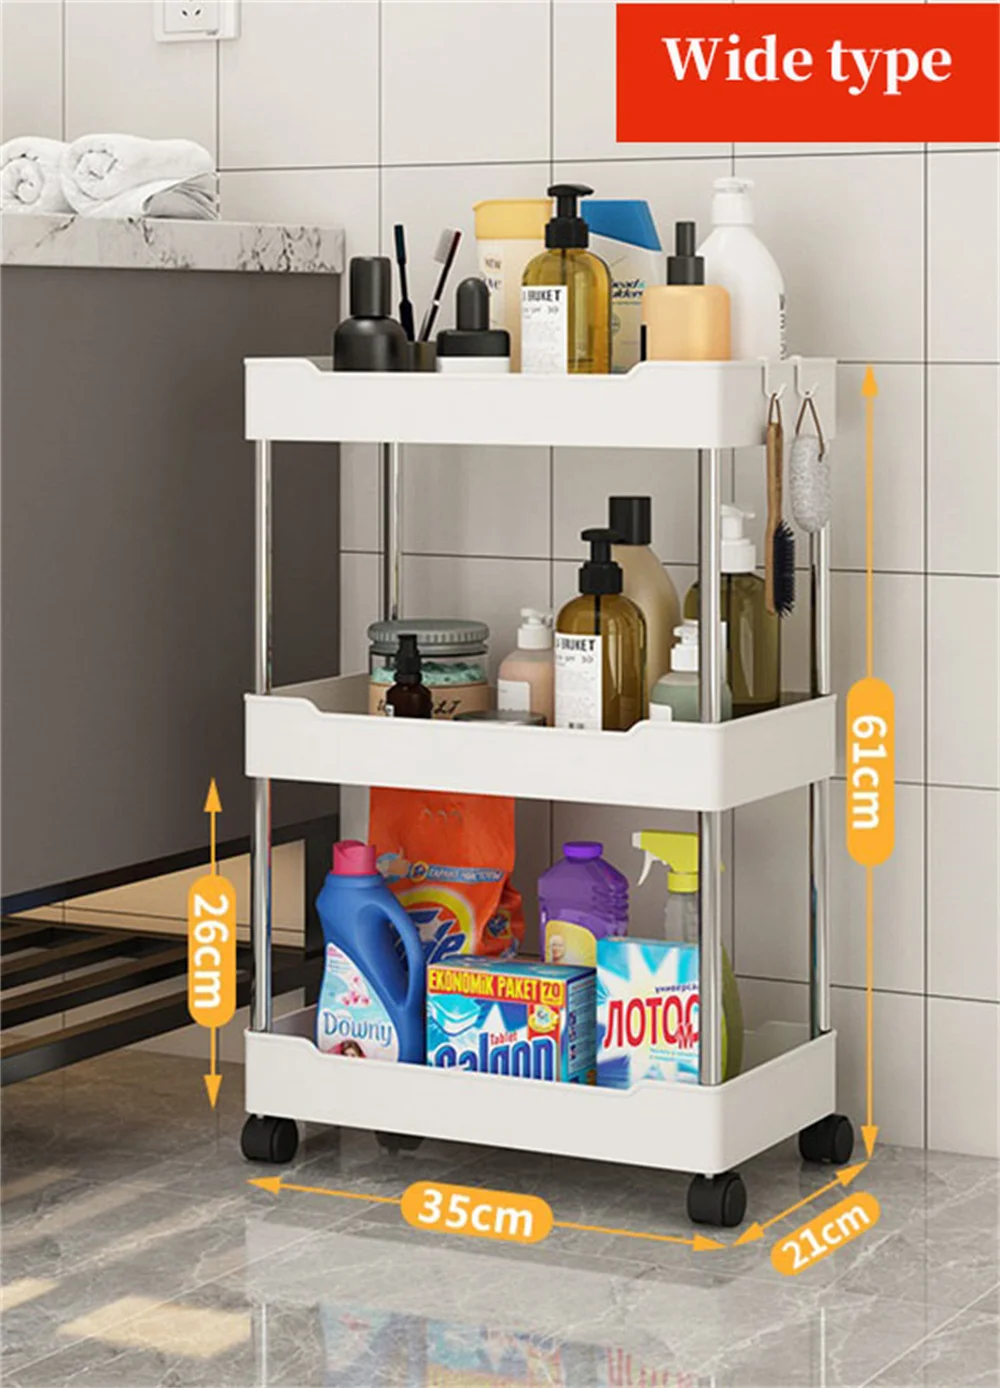 https://ae01.alicdn.com/kf/S3e9b3cbae8e9469a94f5737257afdfe4d/3-4-Tier-Rolling-Utility-Cart-Storage-Shelf-Movable-Gap-Storage-Rack-Kitchen-Bathroom-Slim-Slide.jpg